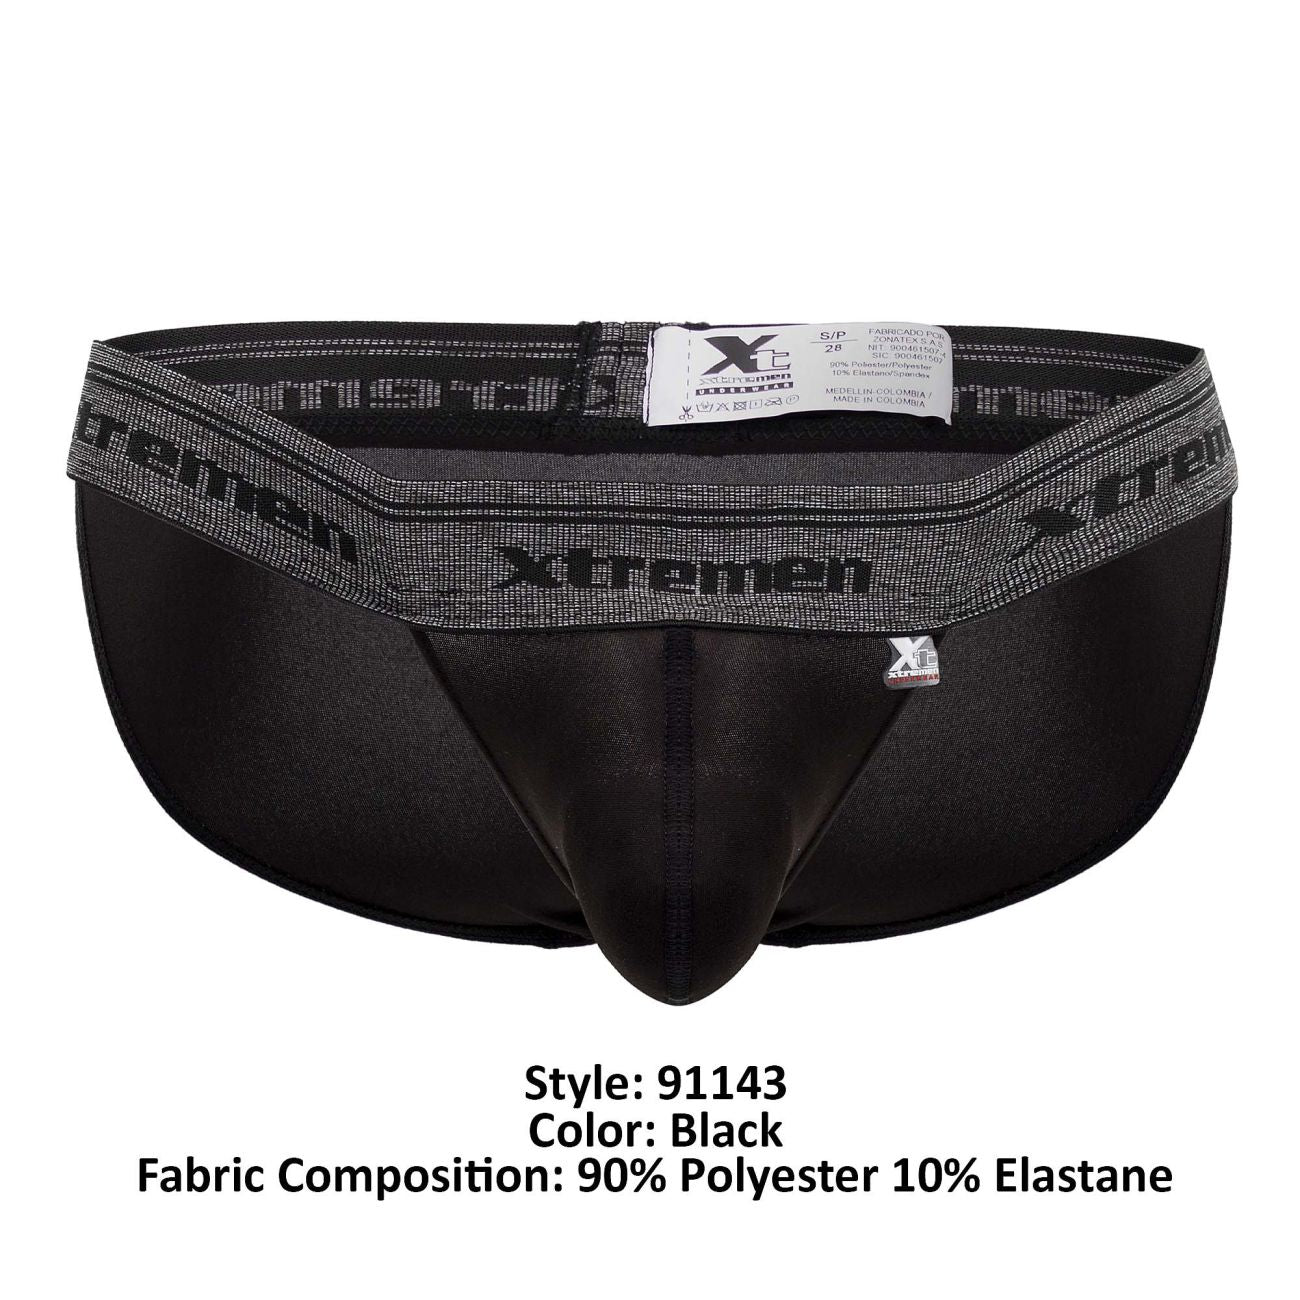 Xtremen 91143 Ultra-soft Bikini Black